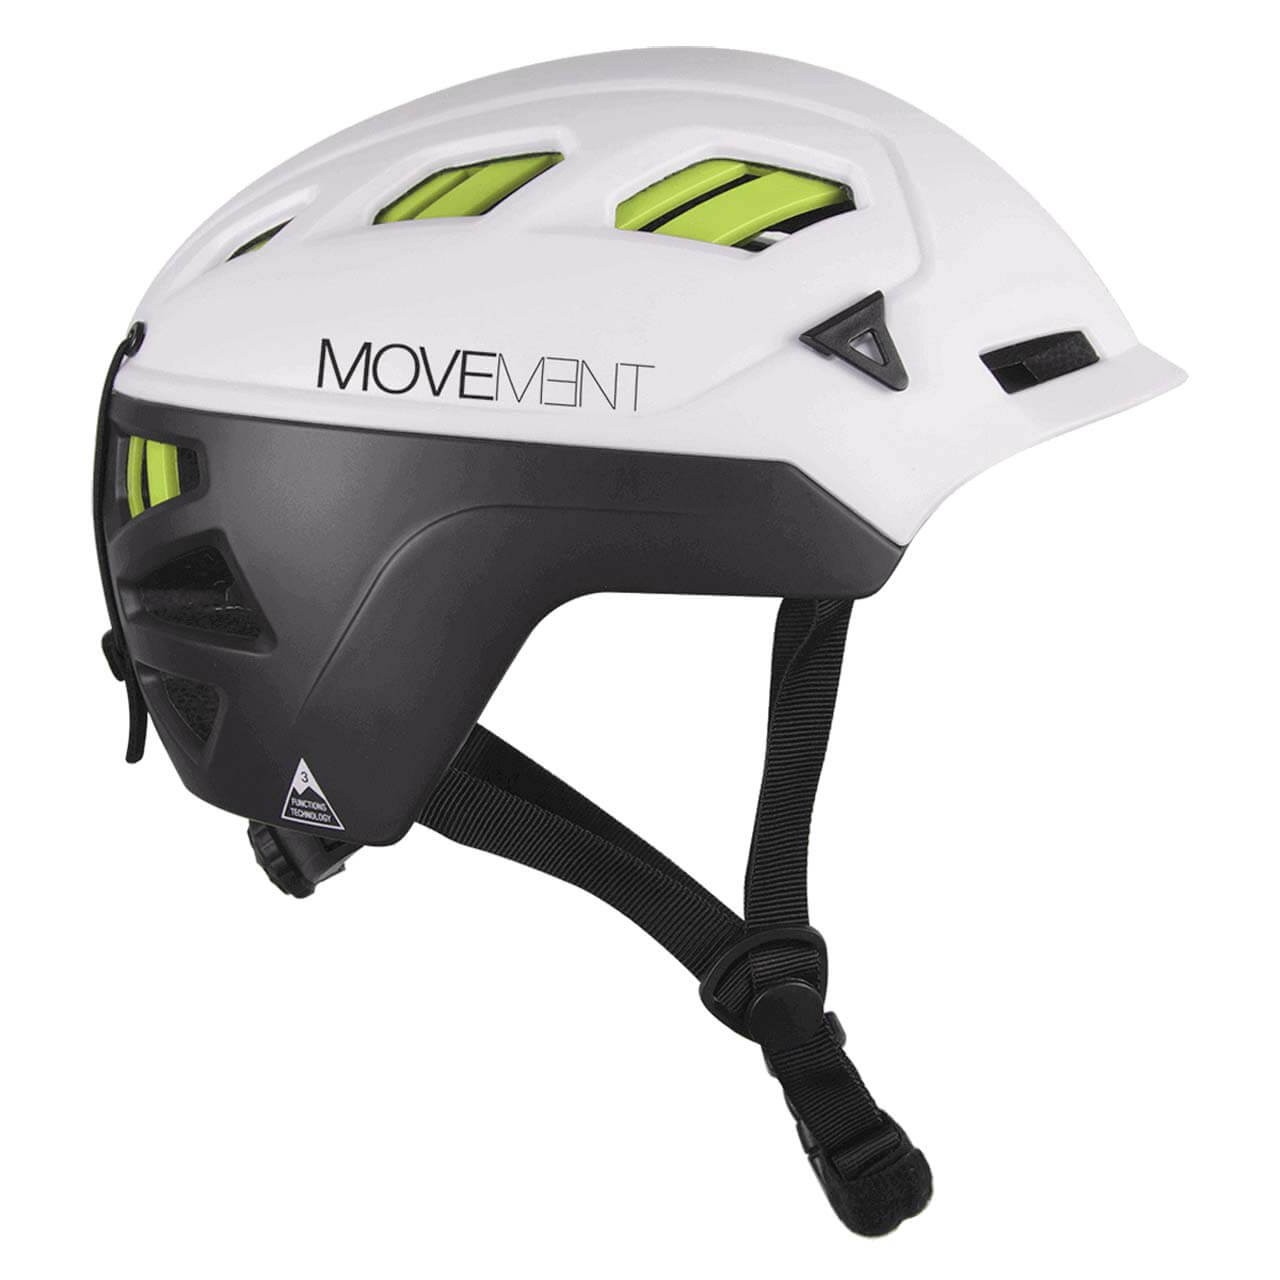 Movement Alpi Helm